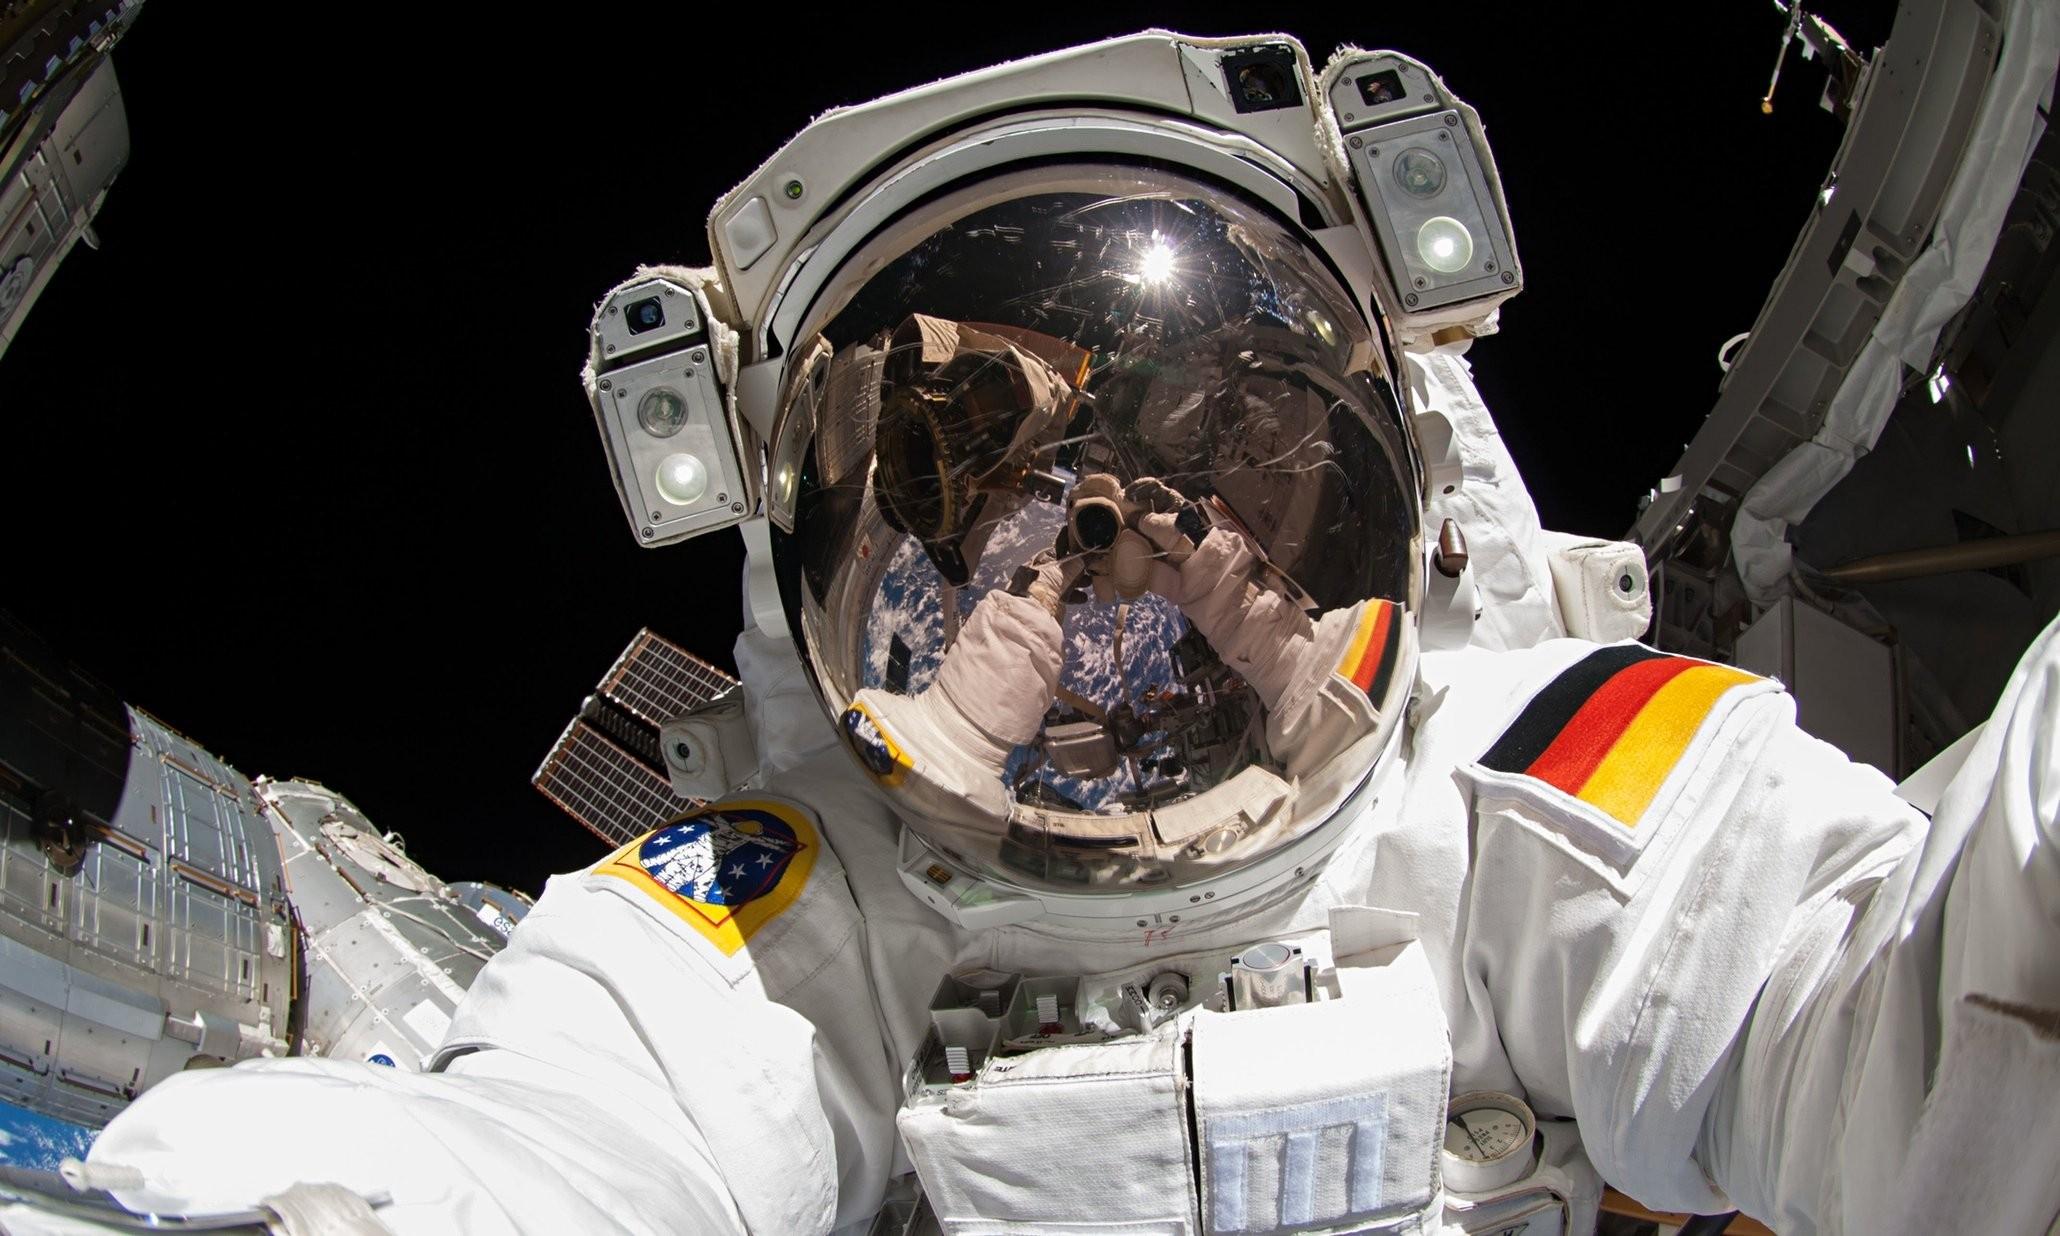 reflection, cameras, self shot, helmet, astronaut, space suit, space